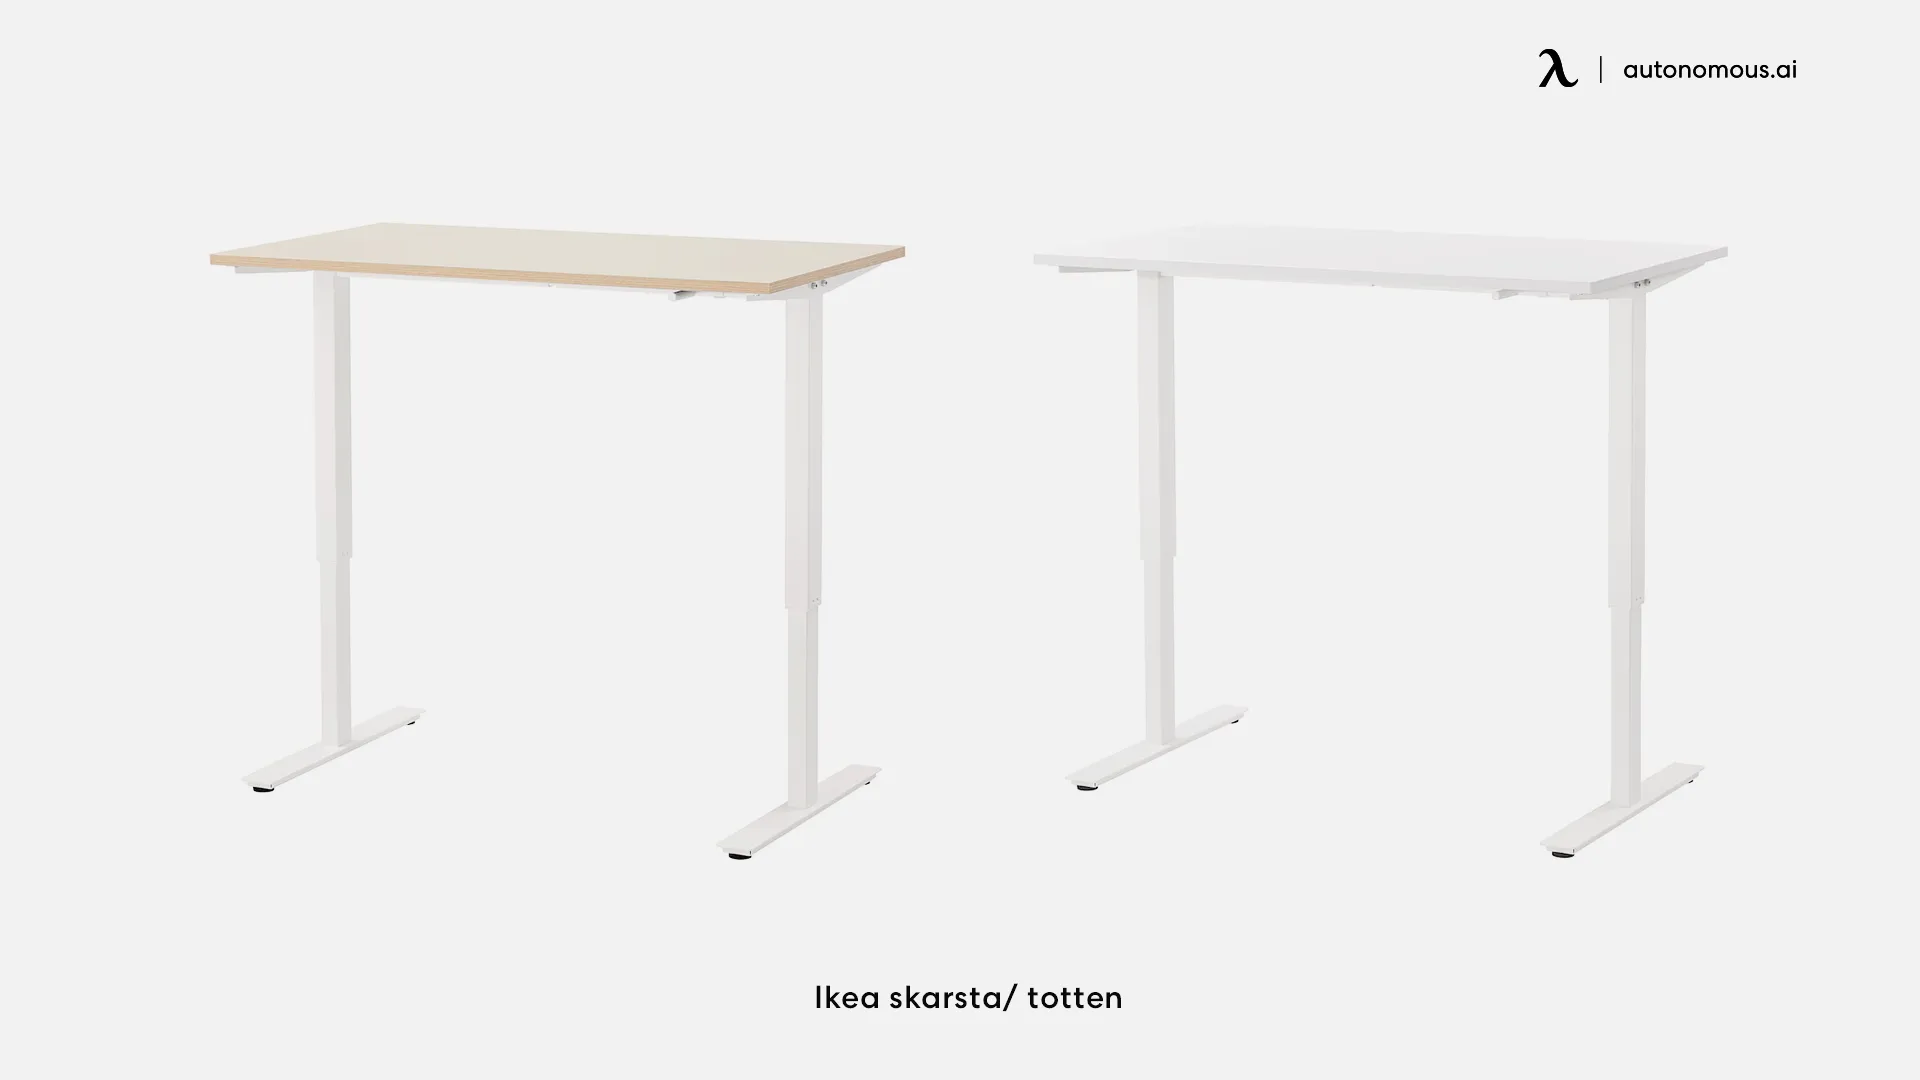 IKEA Skarsta modern office table